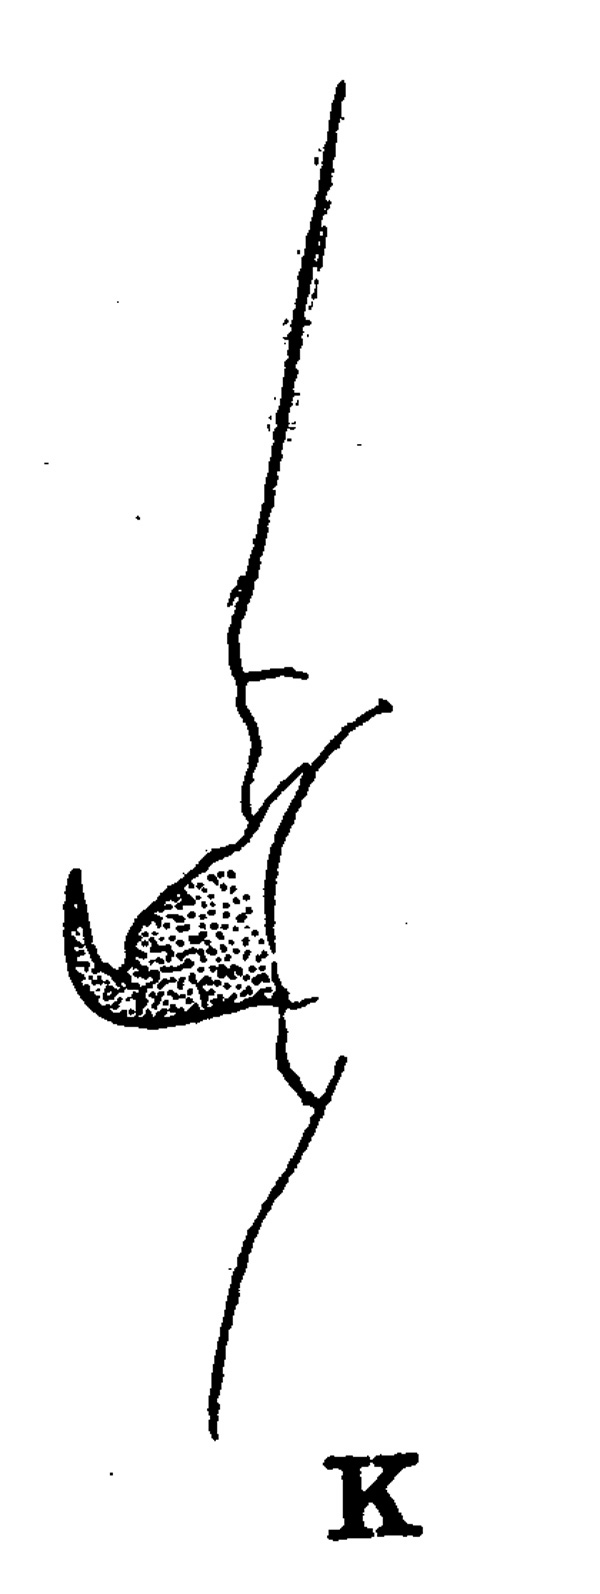 Species Heterorhabdus abyssalis - Plate 6 of morphological figures